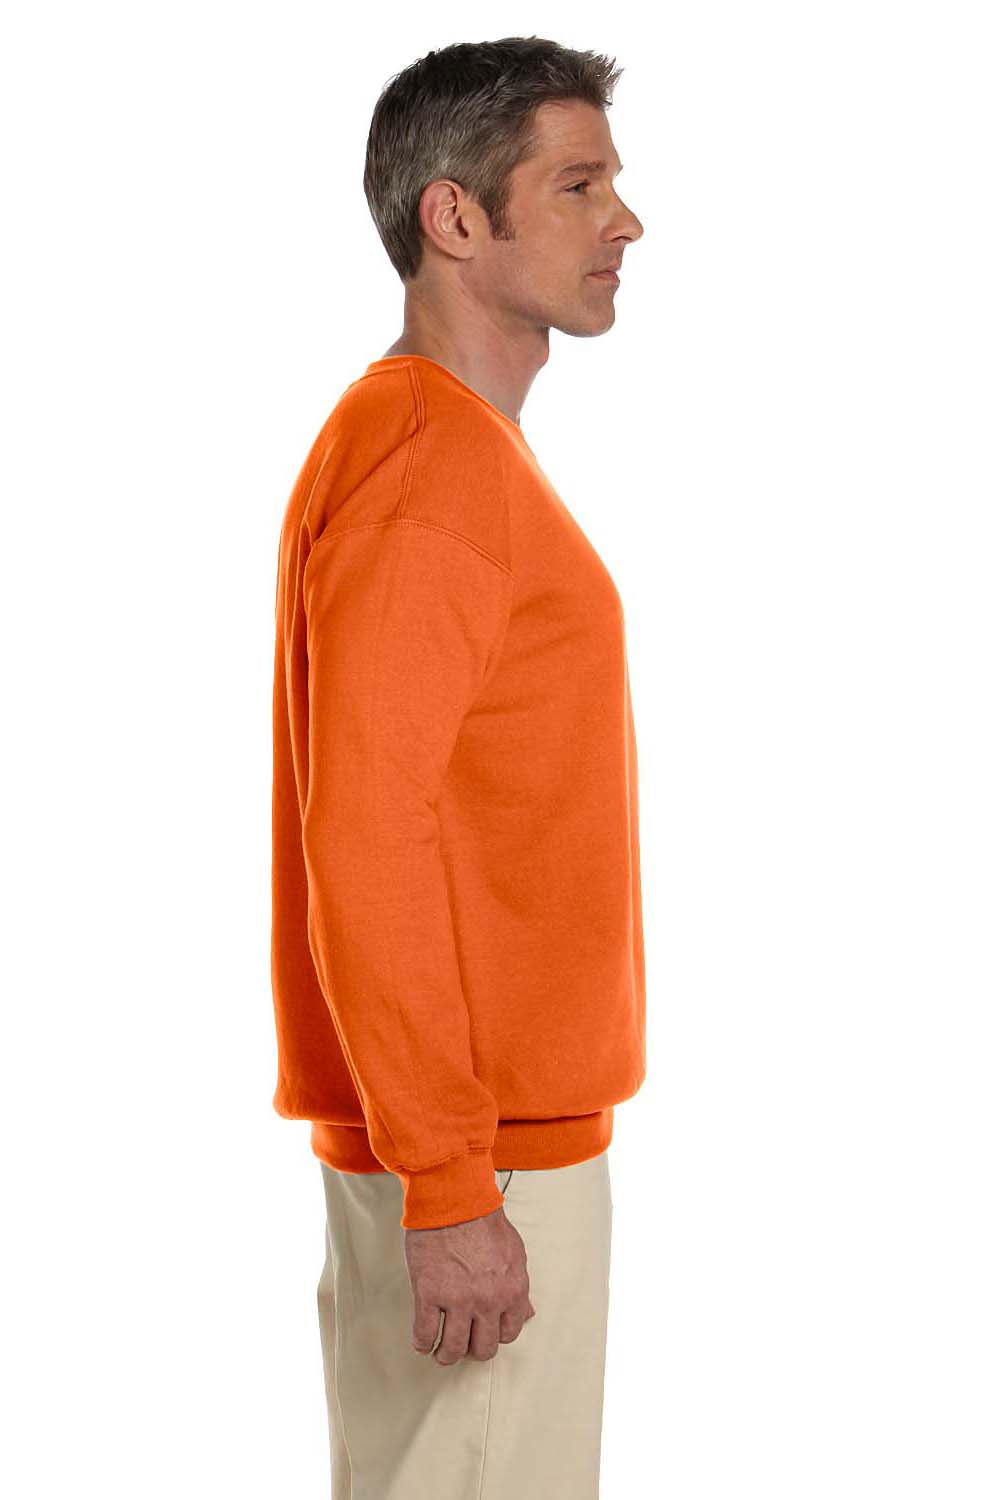 Gildan G180 Mens Fleece Crewneck Sweatshirt Orange Side